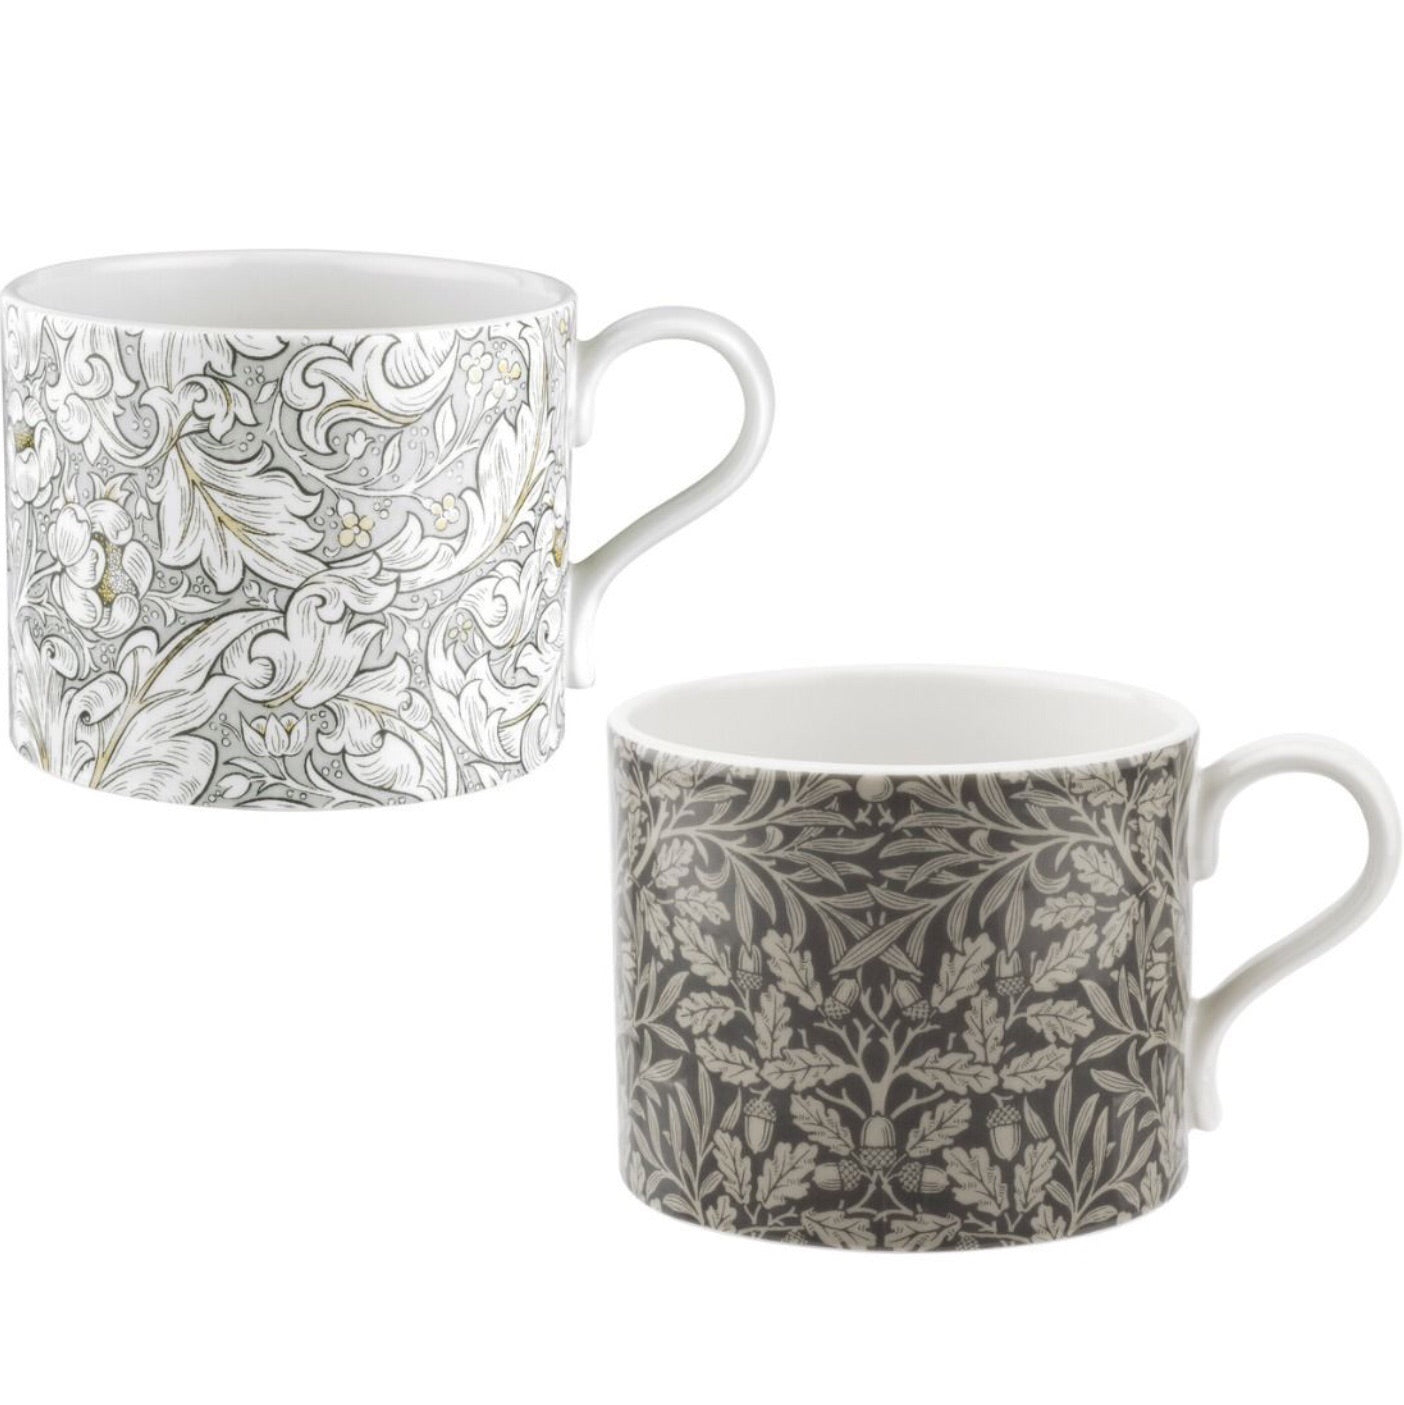 Morris & Co. Set of 2 Mugs - Pure Morris Bachelors Button and Acorn